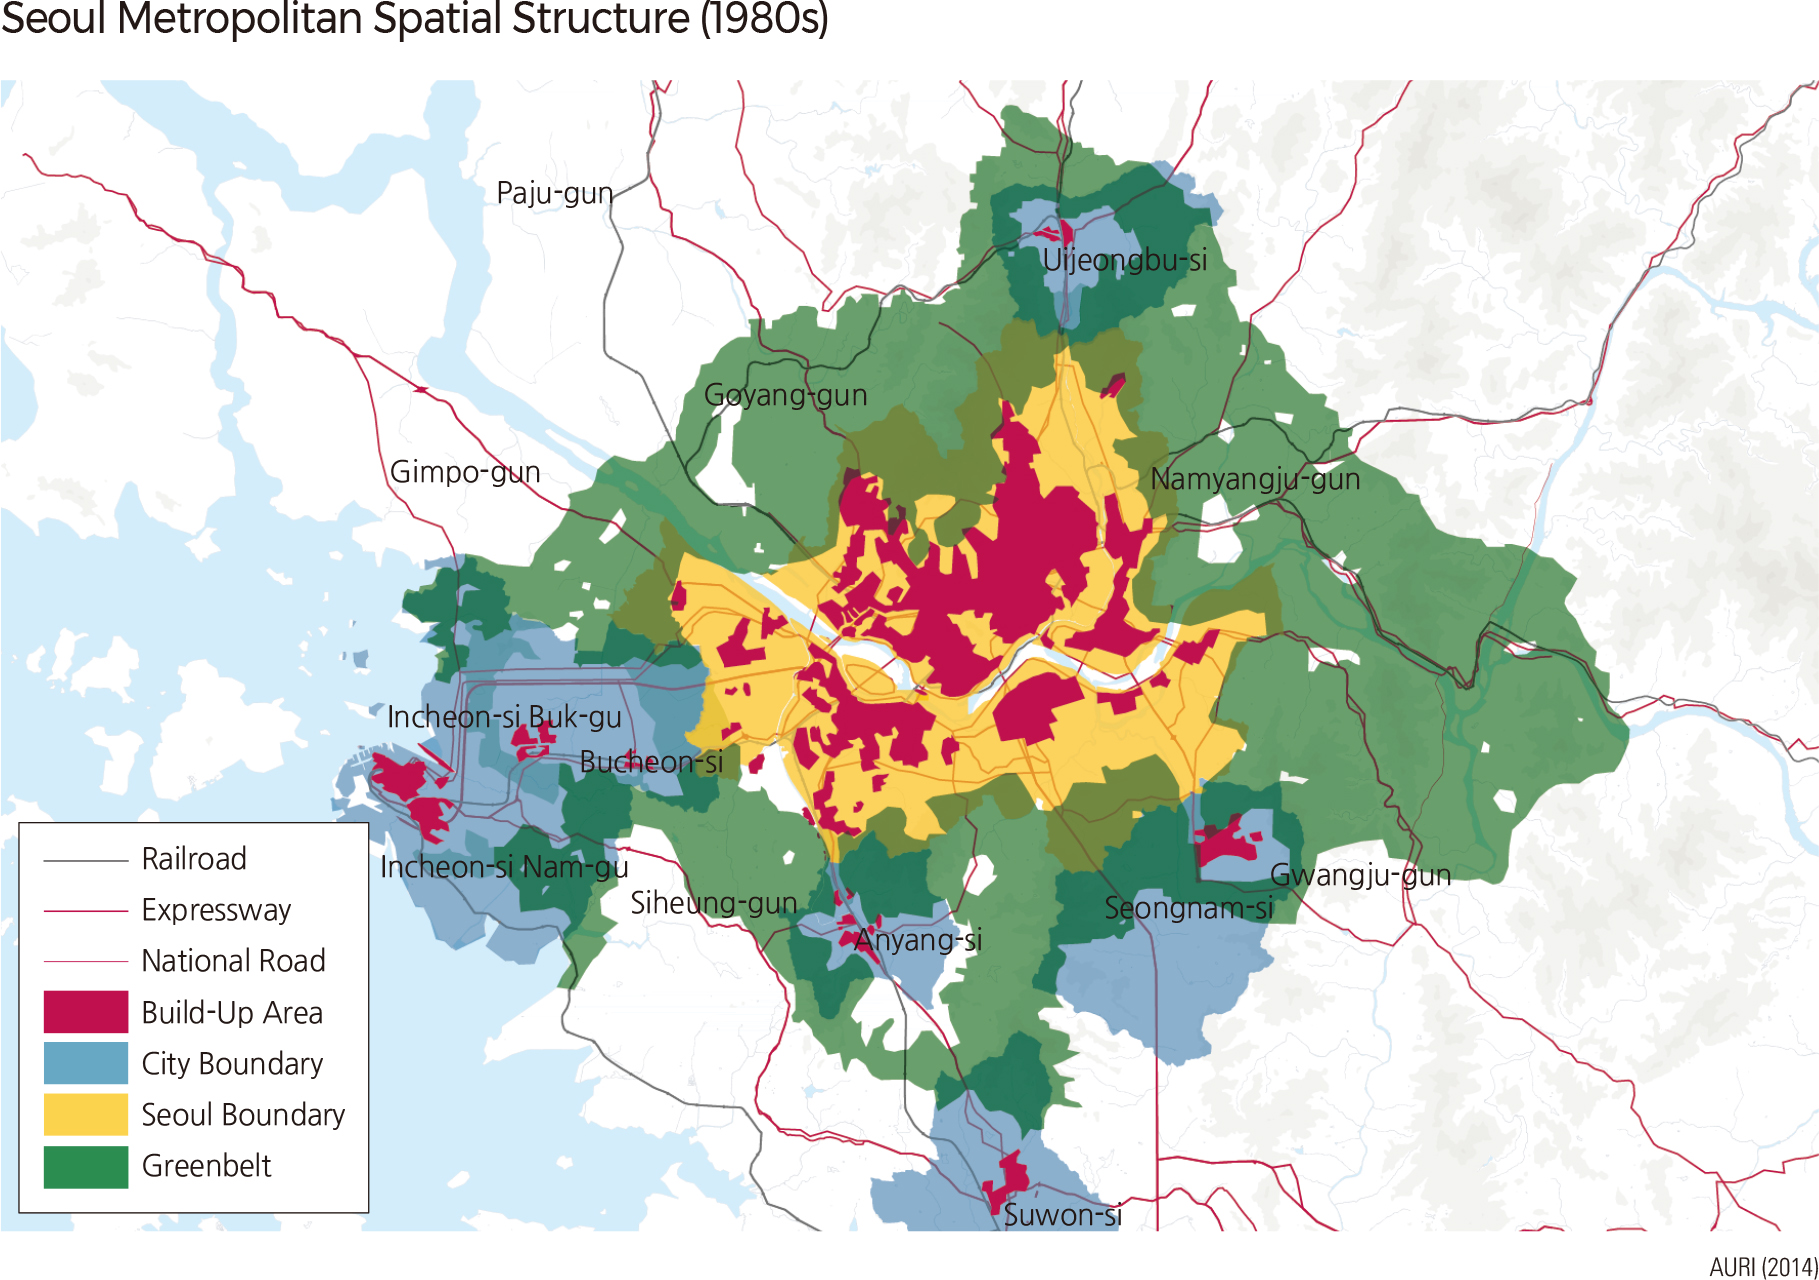 Seoul Metropolitan Spatial Structure (1980s)